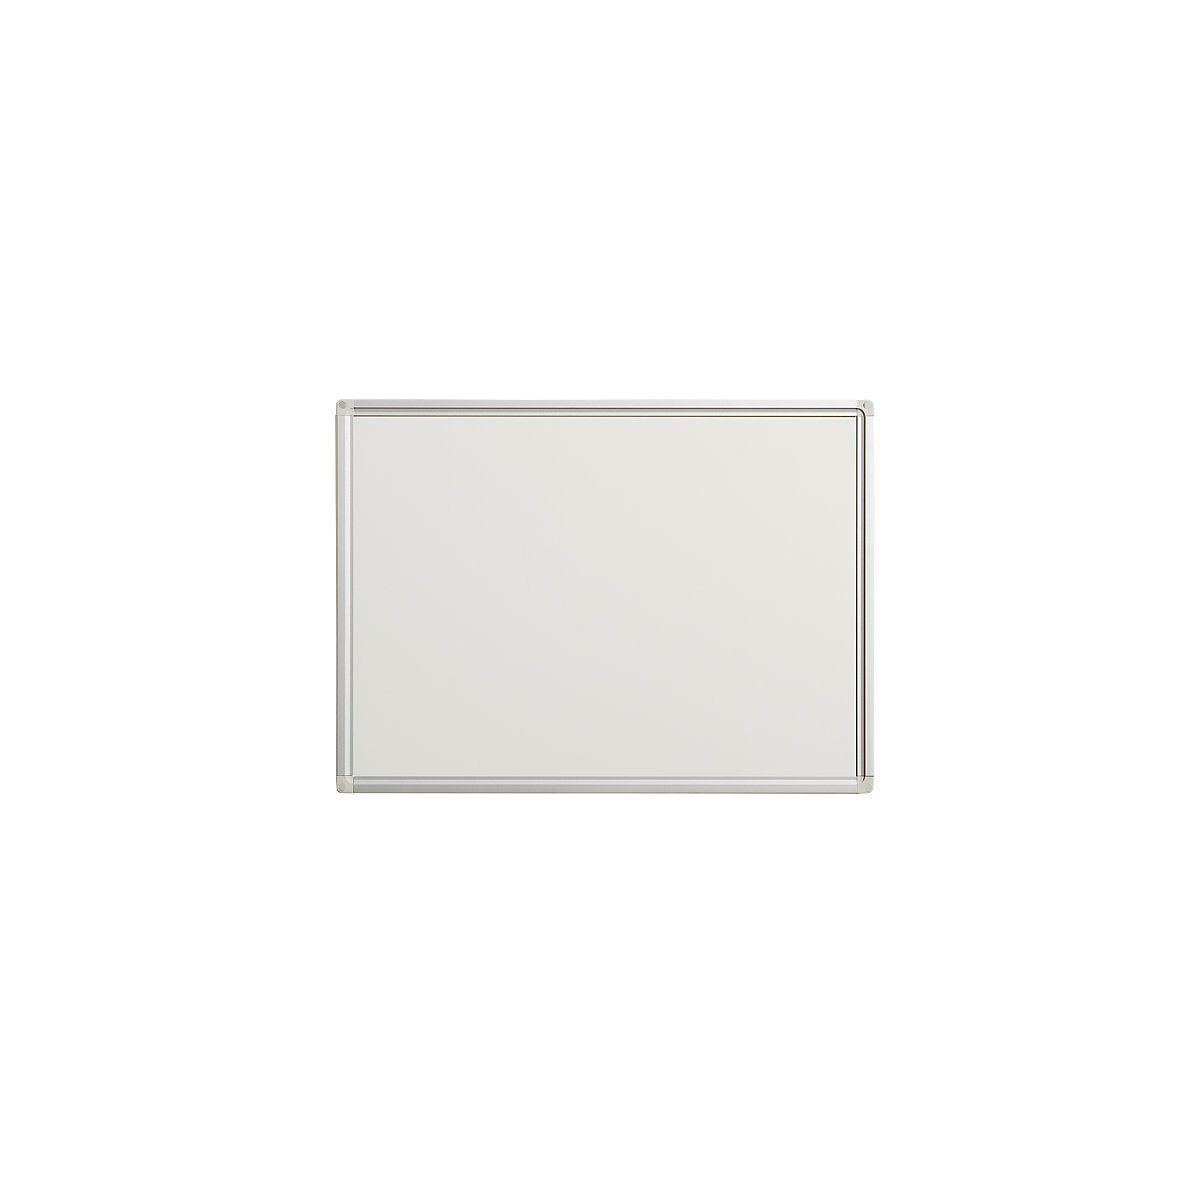 Economy whiteboard – eurokraft pro, sheet steel, painted, WxH 600 x 450 mm-12